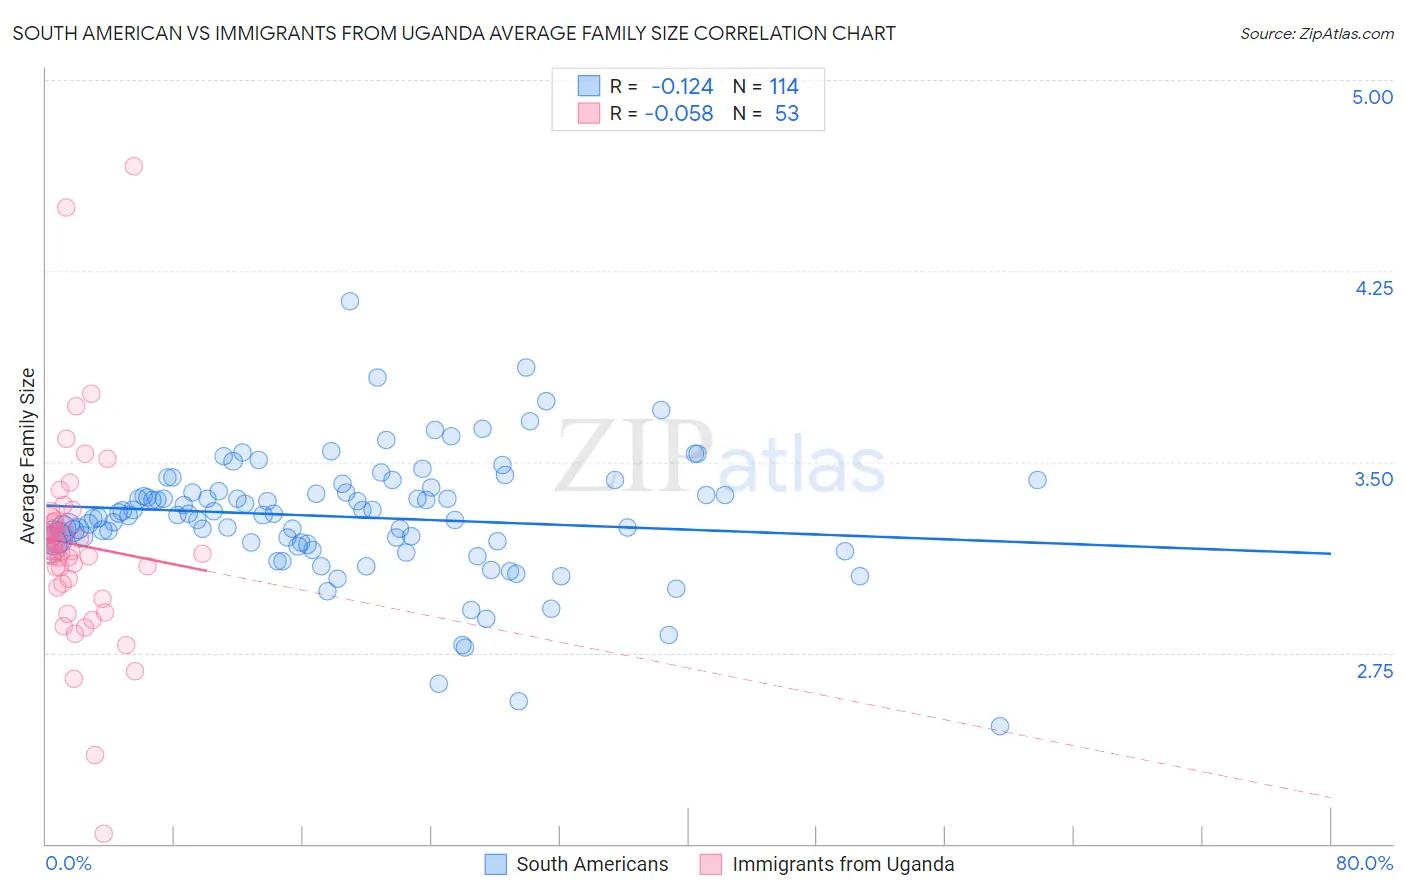 South American vs Immigrants from Uganda Average Family Size